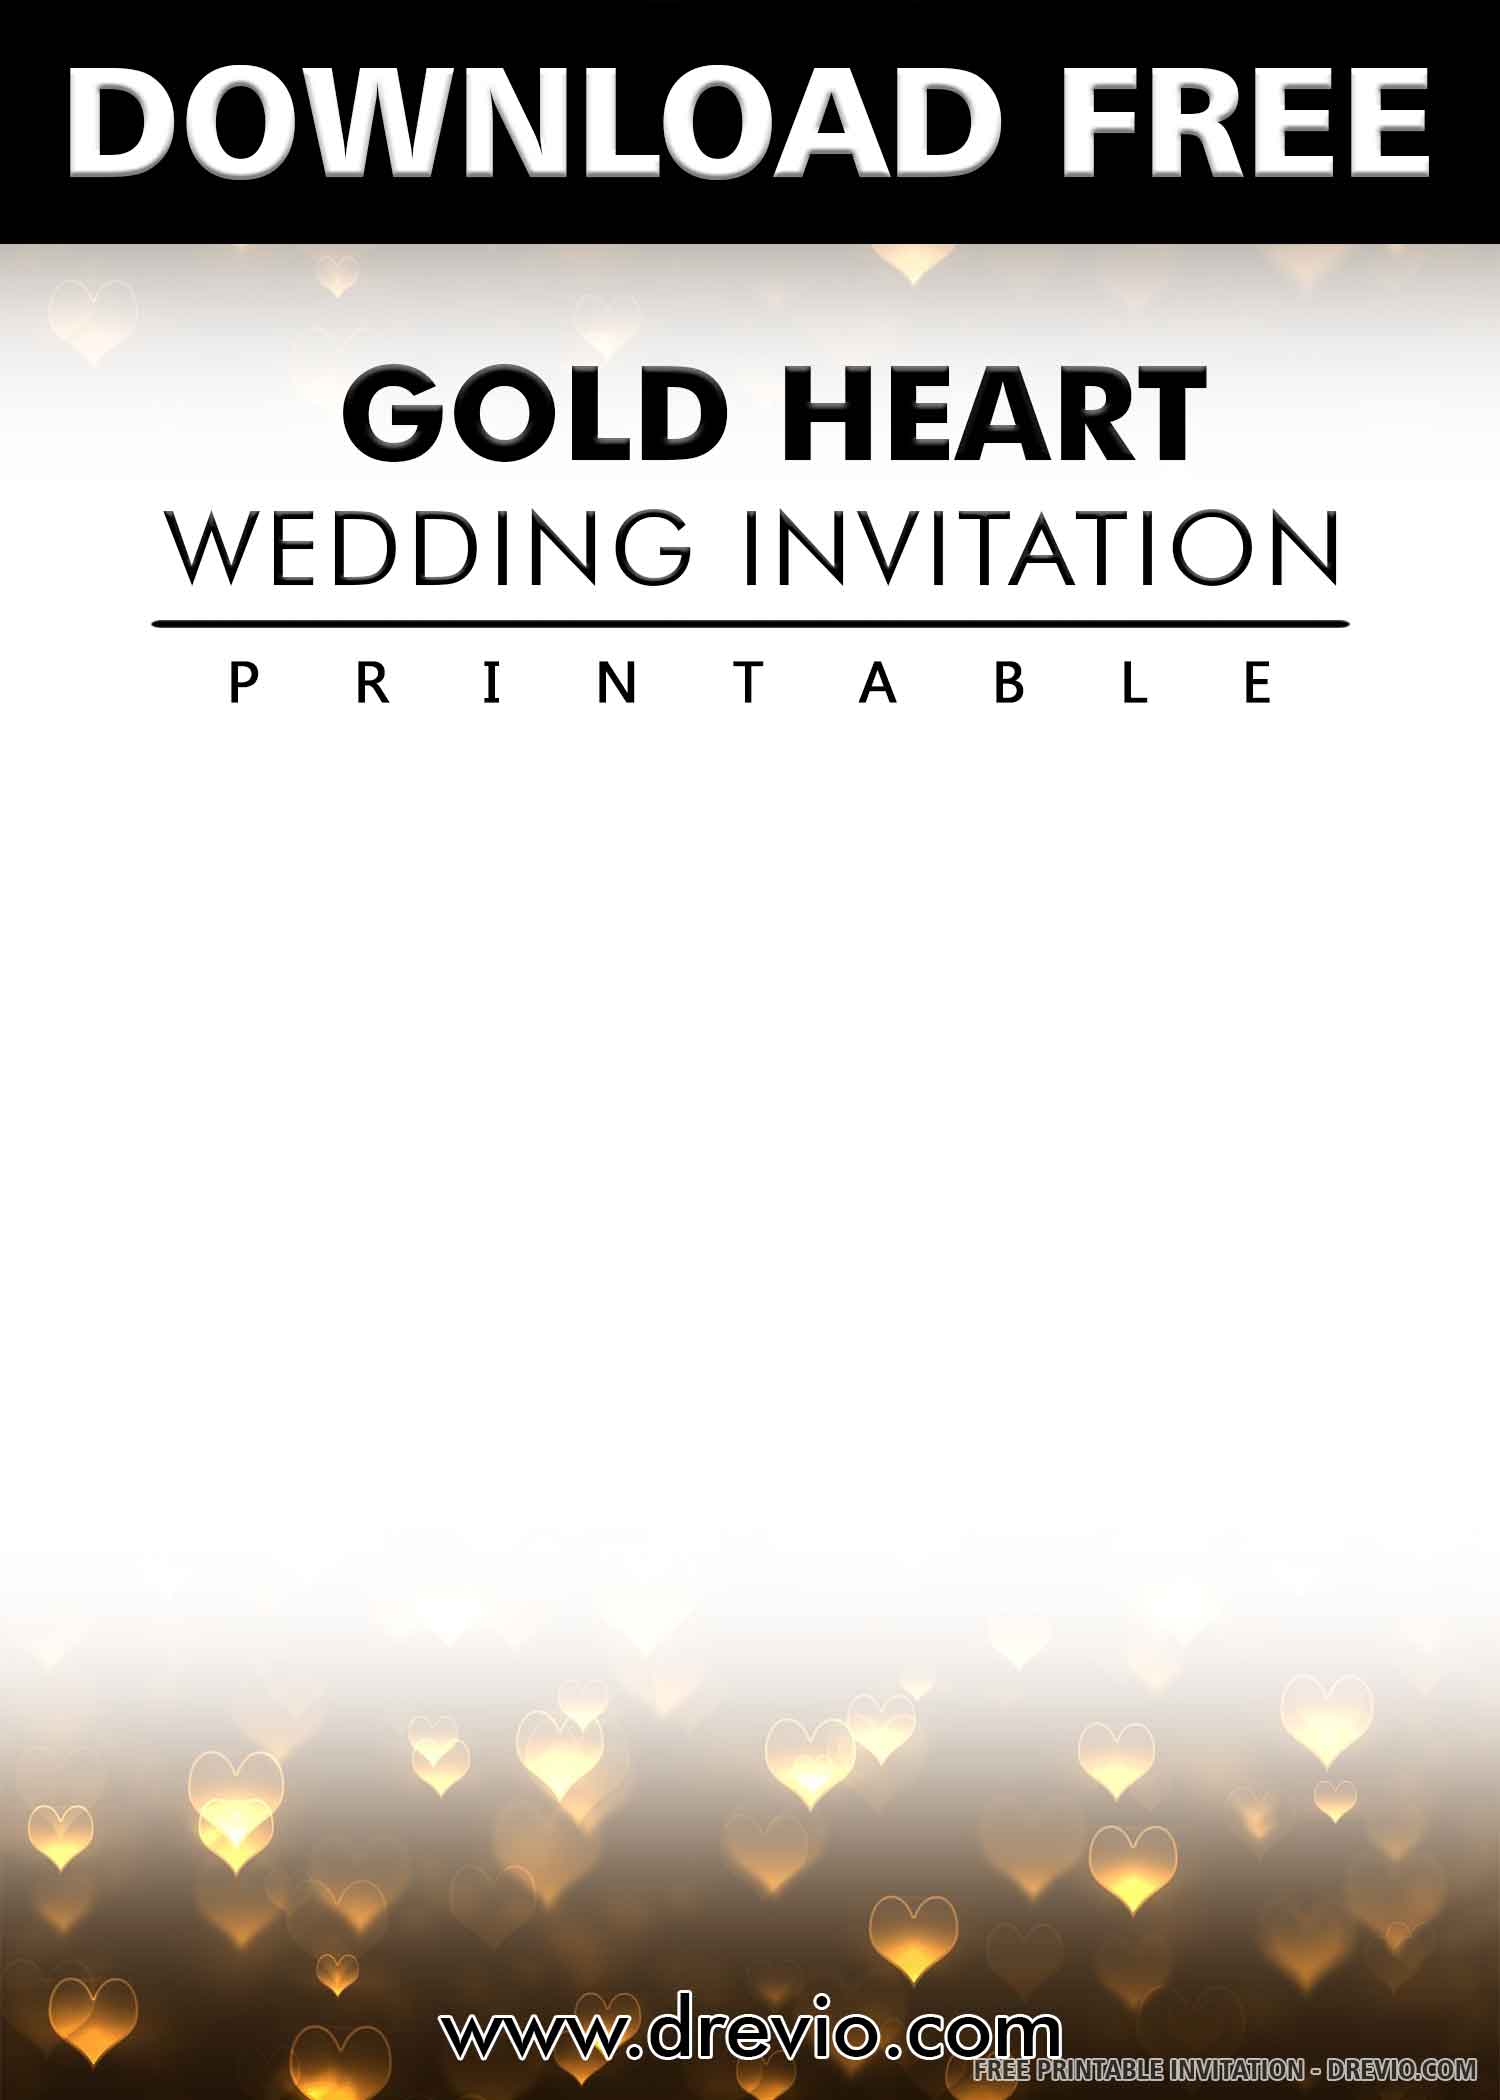 Free Printable Gold Hearts Wedding Invitation Templates Drevio - free printable roblox invitation templates drevio